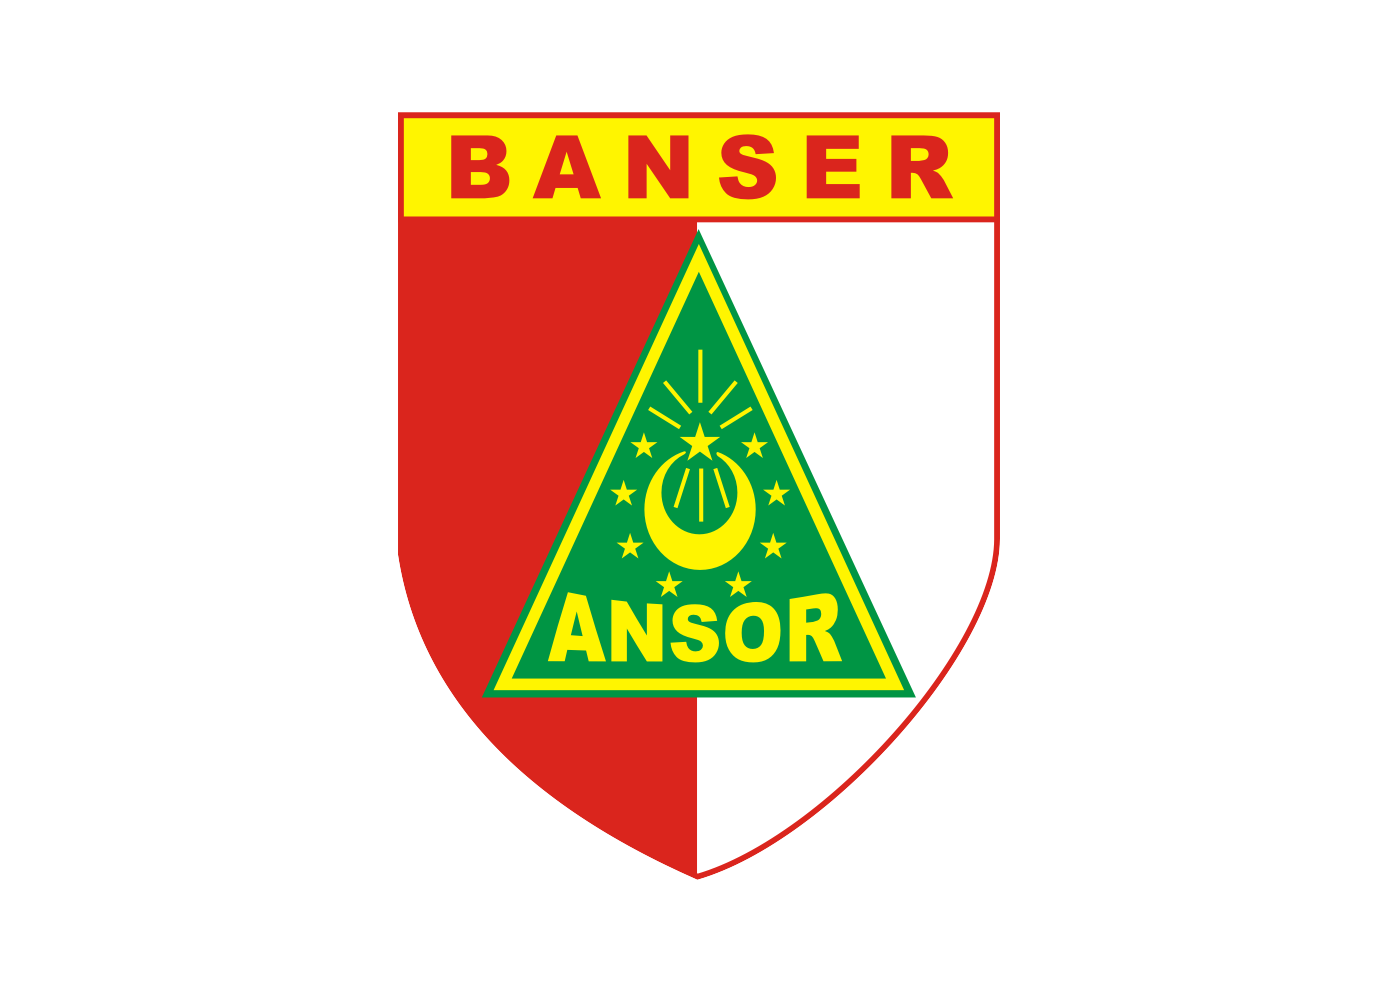 Logo Banser Ansor Vector - Free Logo Vector Download